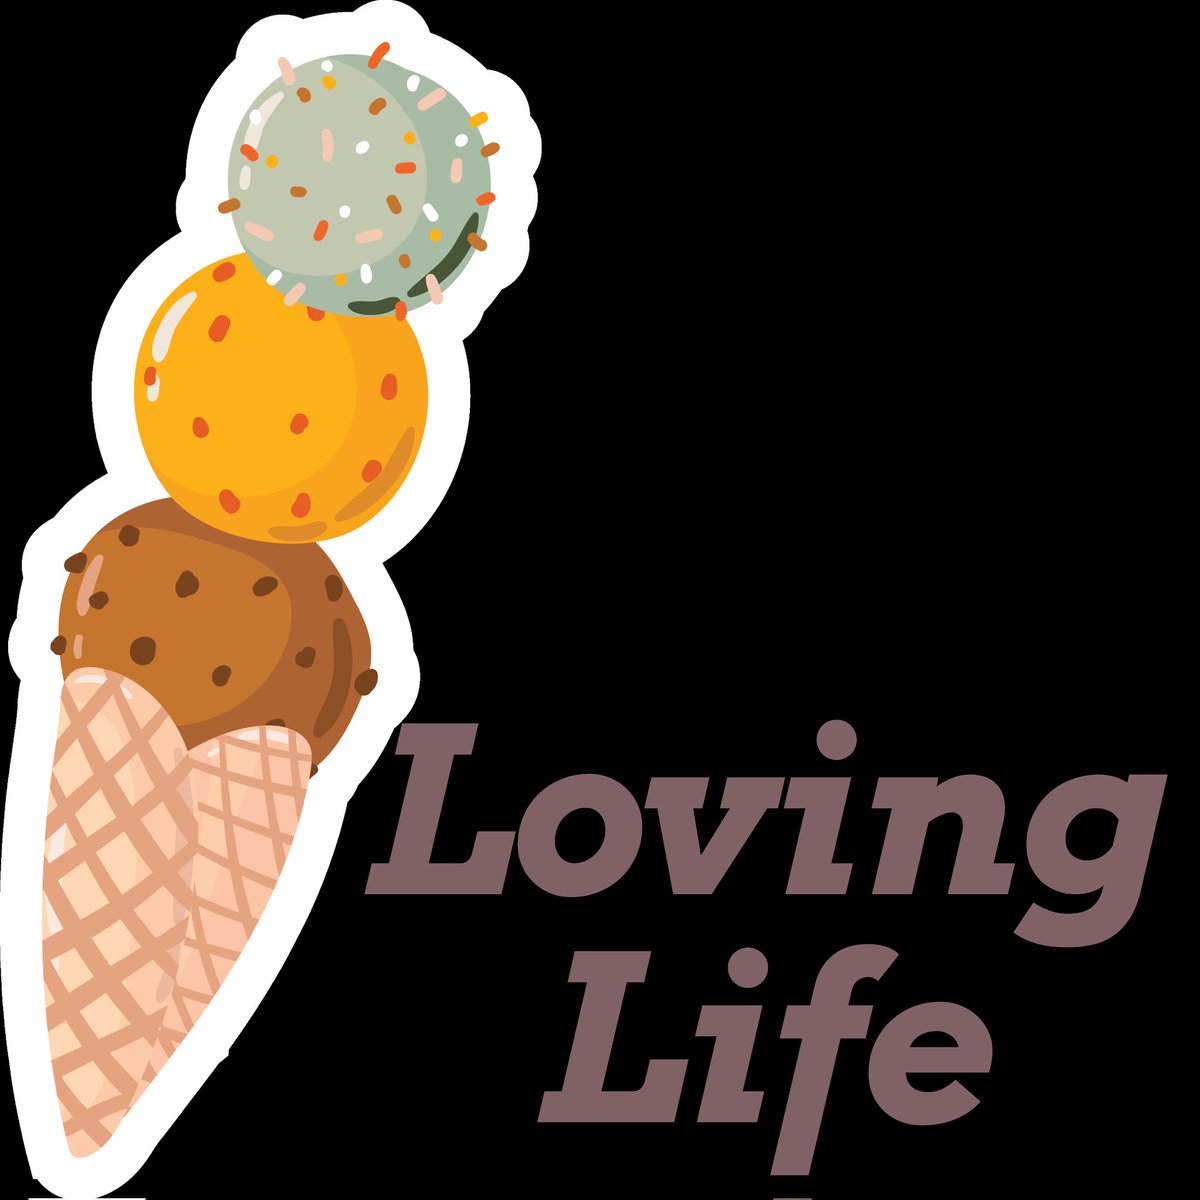 Loving Life Designs

#lovinglife #inspiringothers #llio #life #inspiration #inspiring #luvlife #lovinlife #inspire #luvinlife